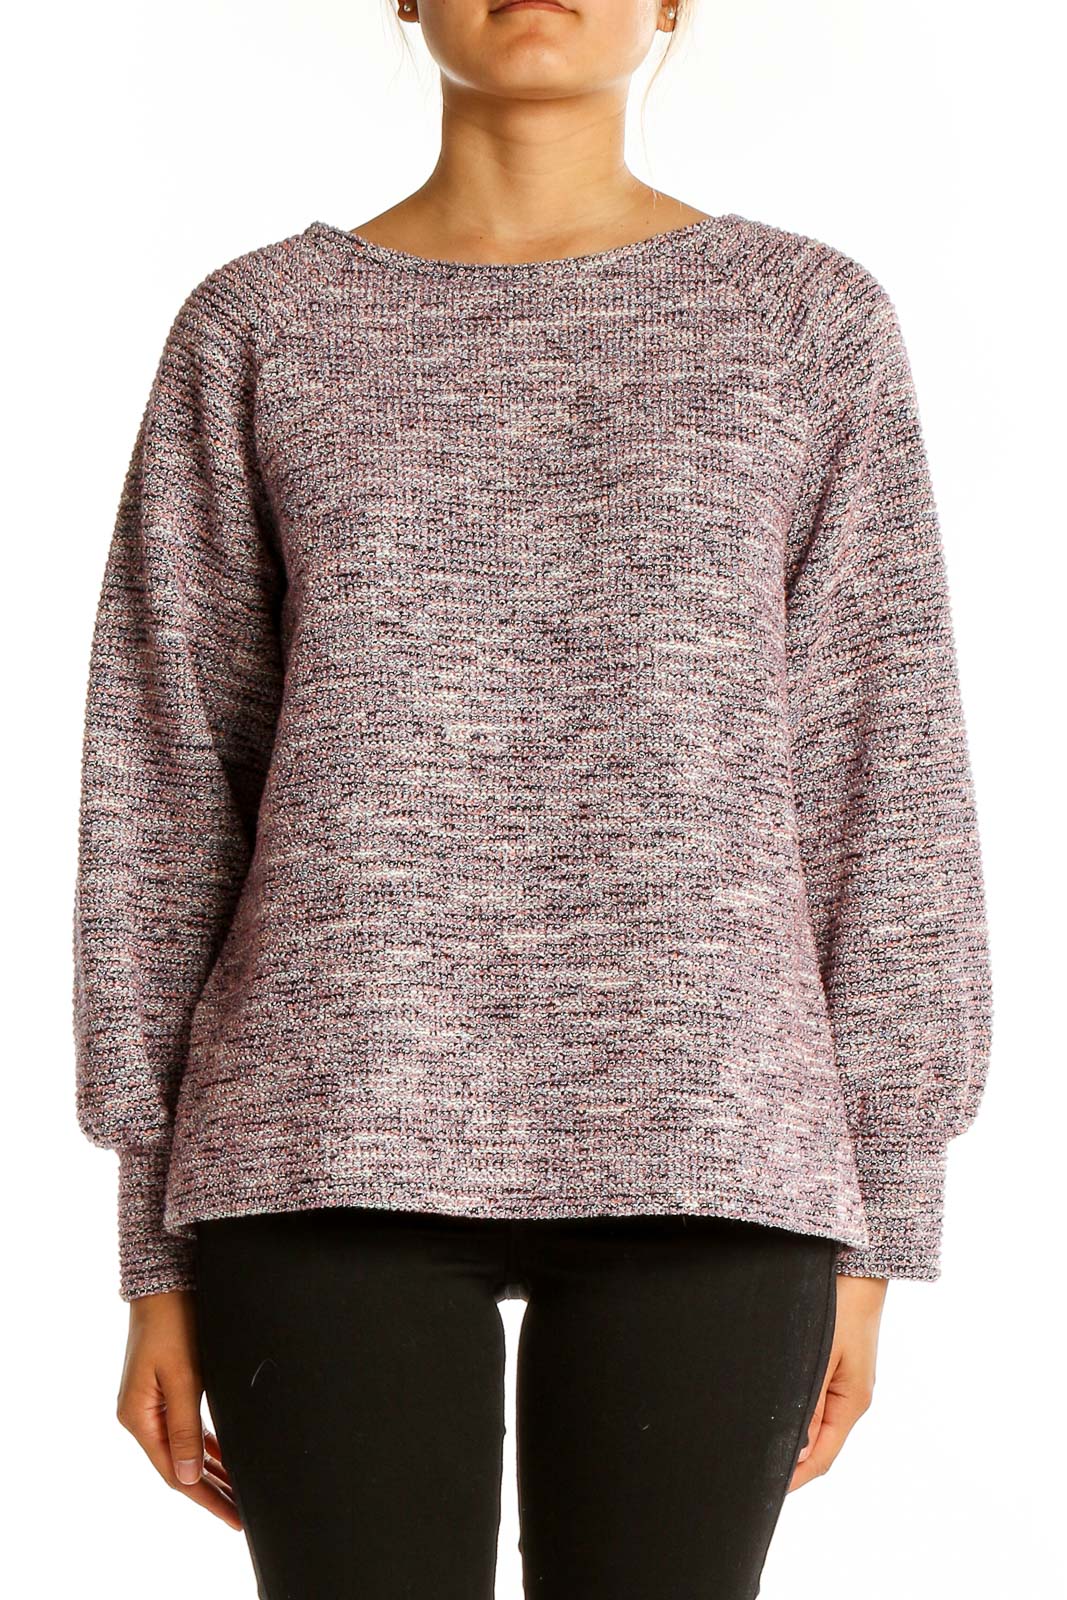 Beige Texture Sweater Front